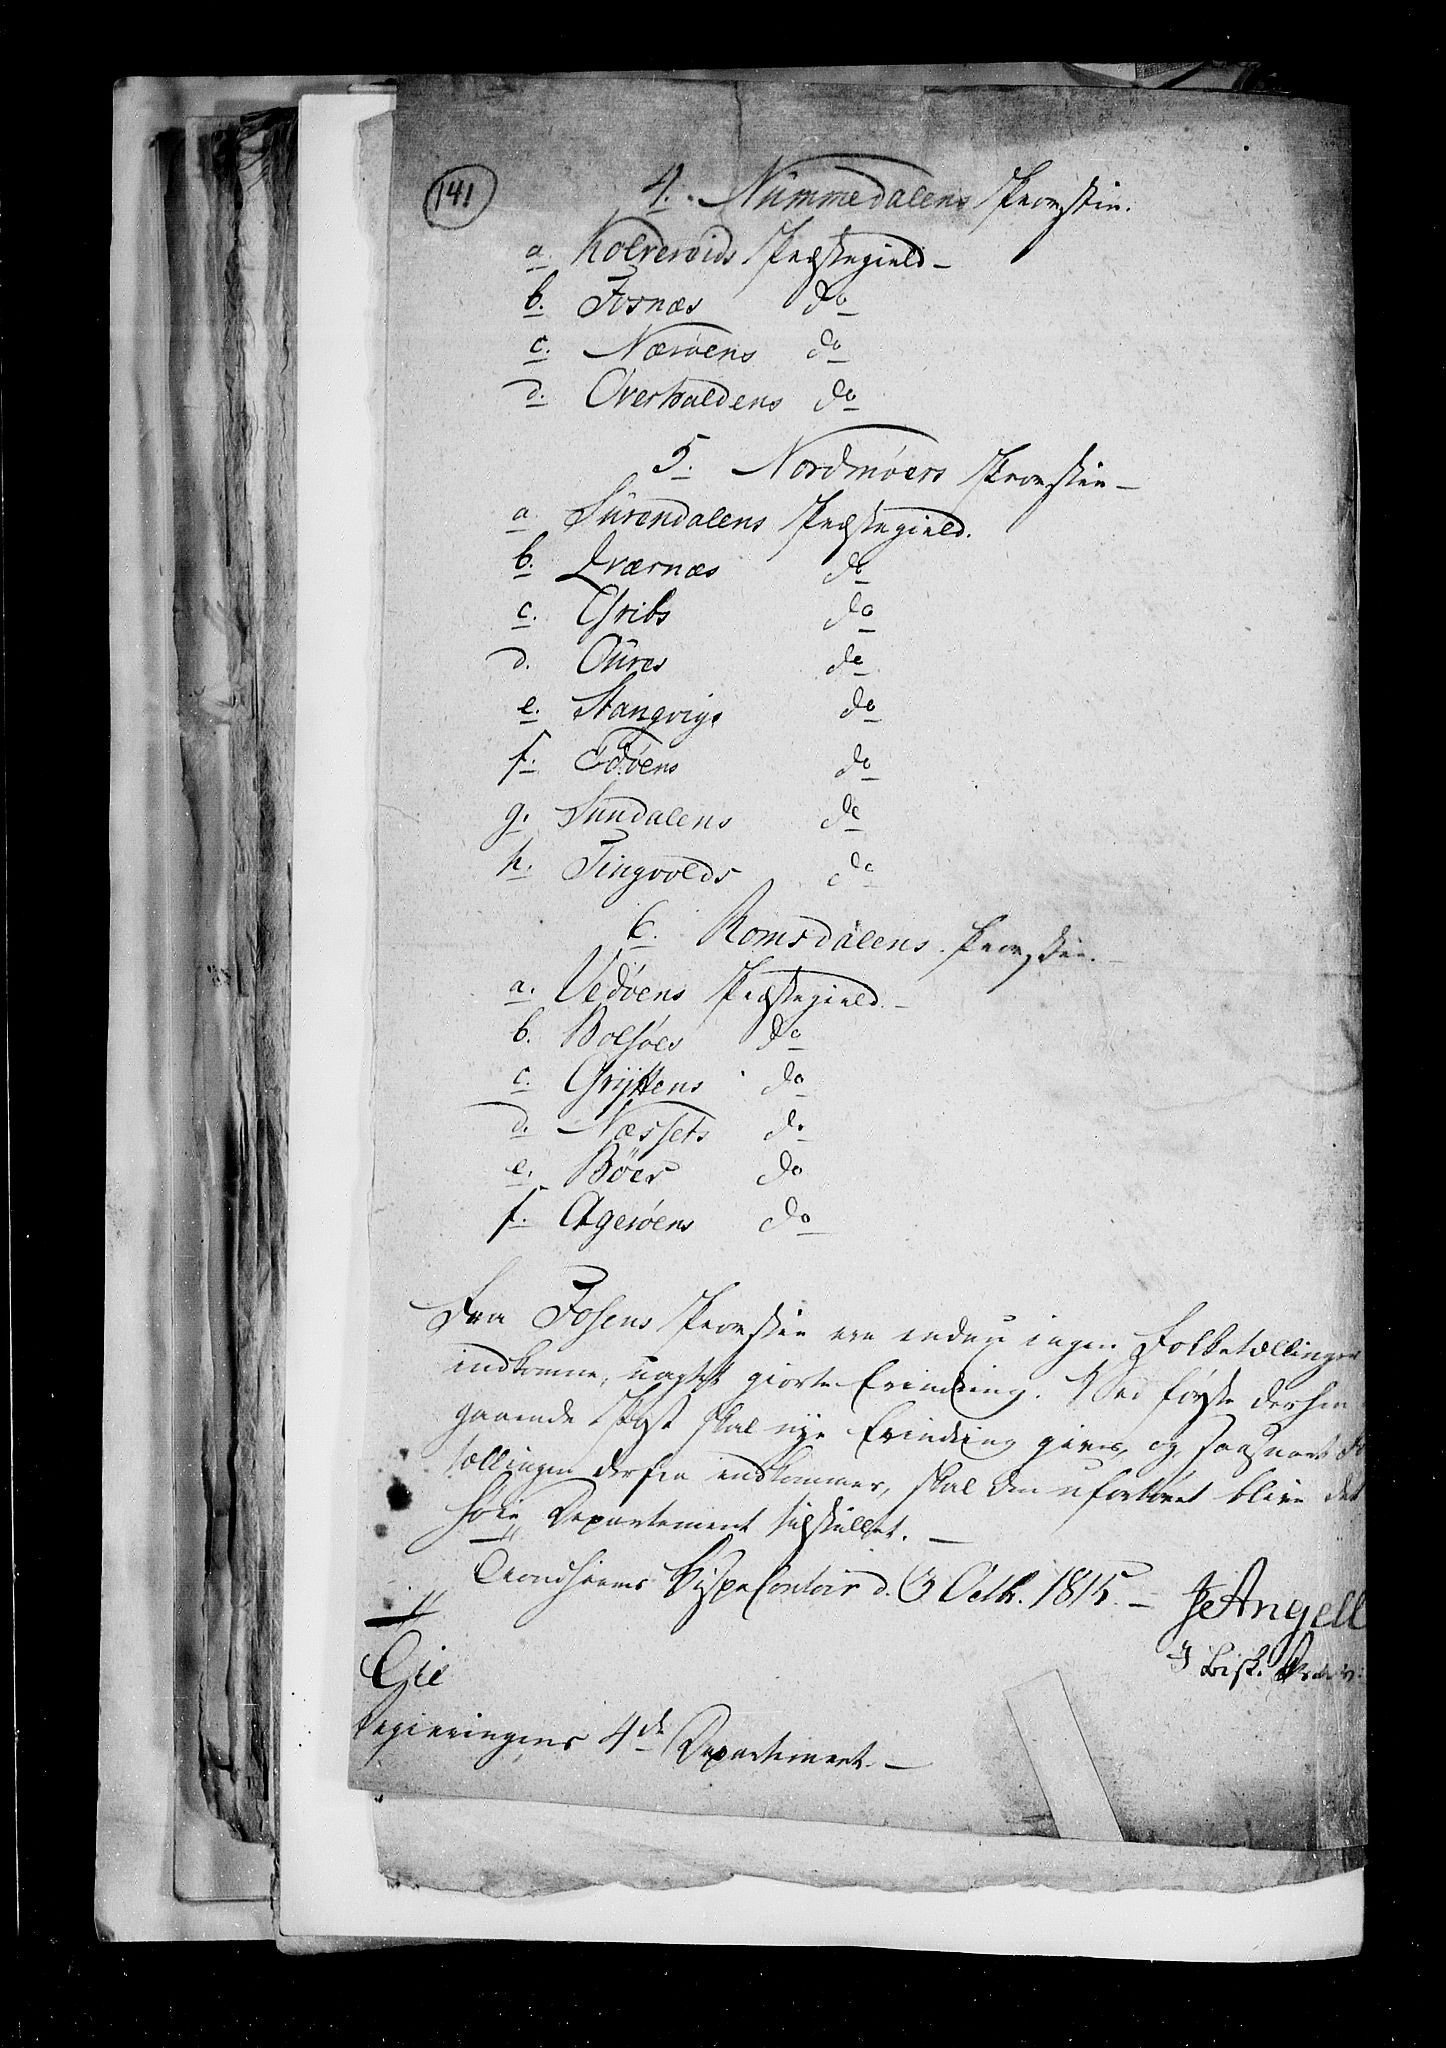 RA, Census 1815, vol. 2: Bergen stift and Trondheim stift, 1815, p. 87